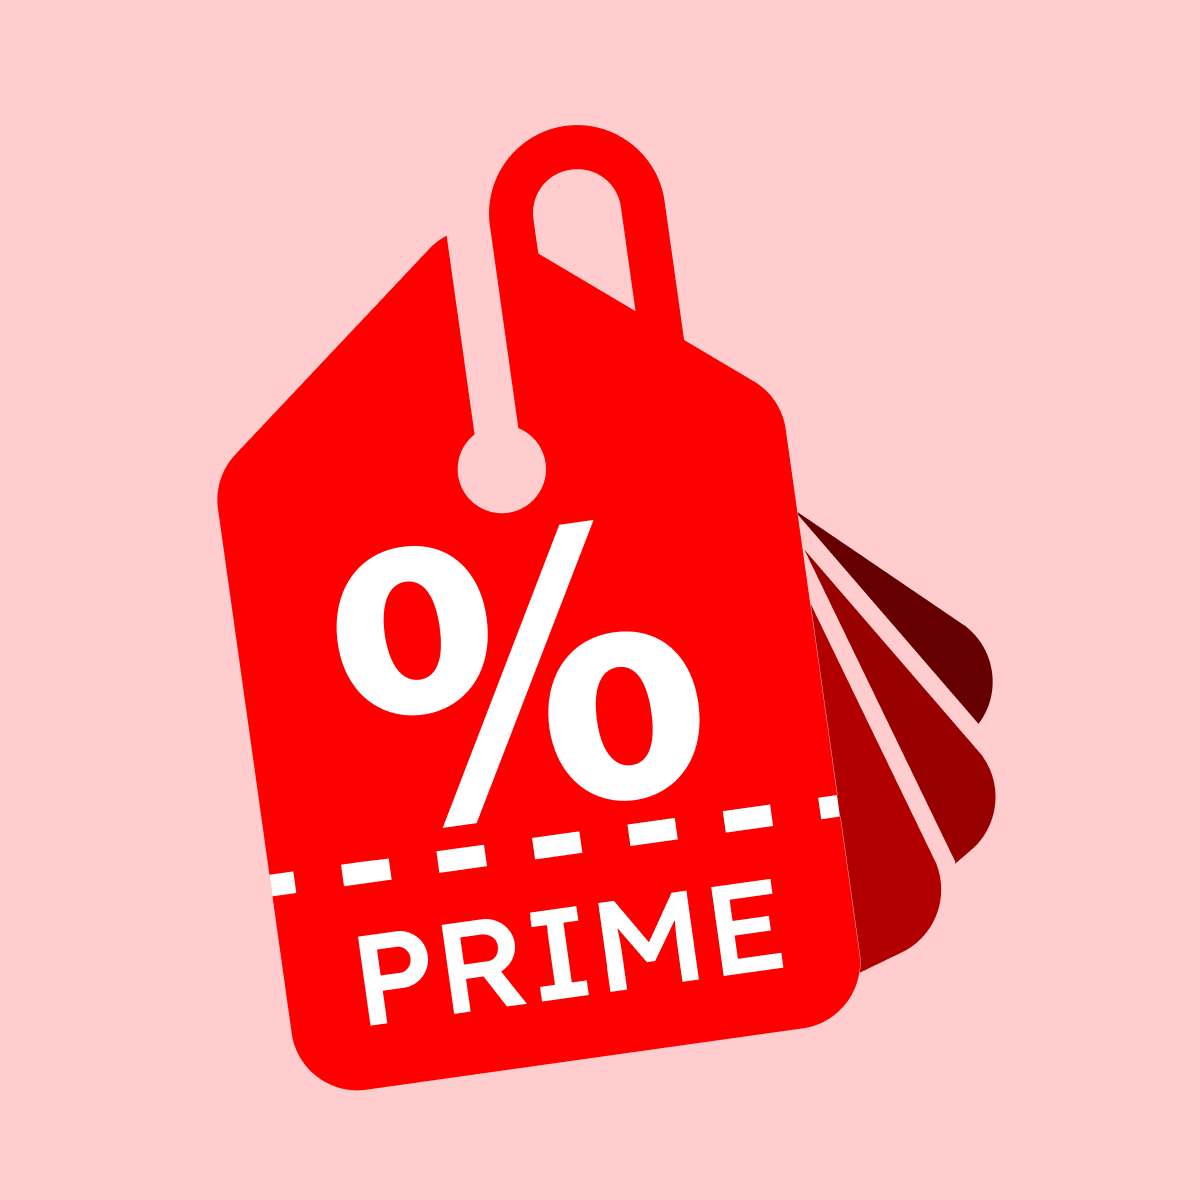 Prime: Volume & Bulk Discount 